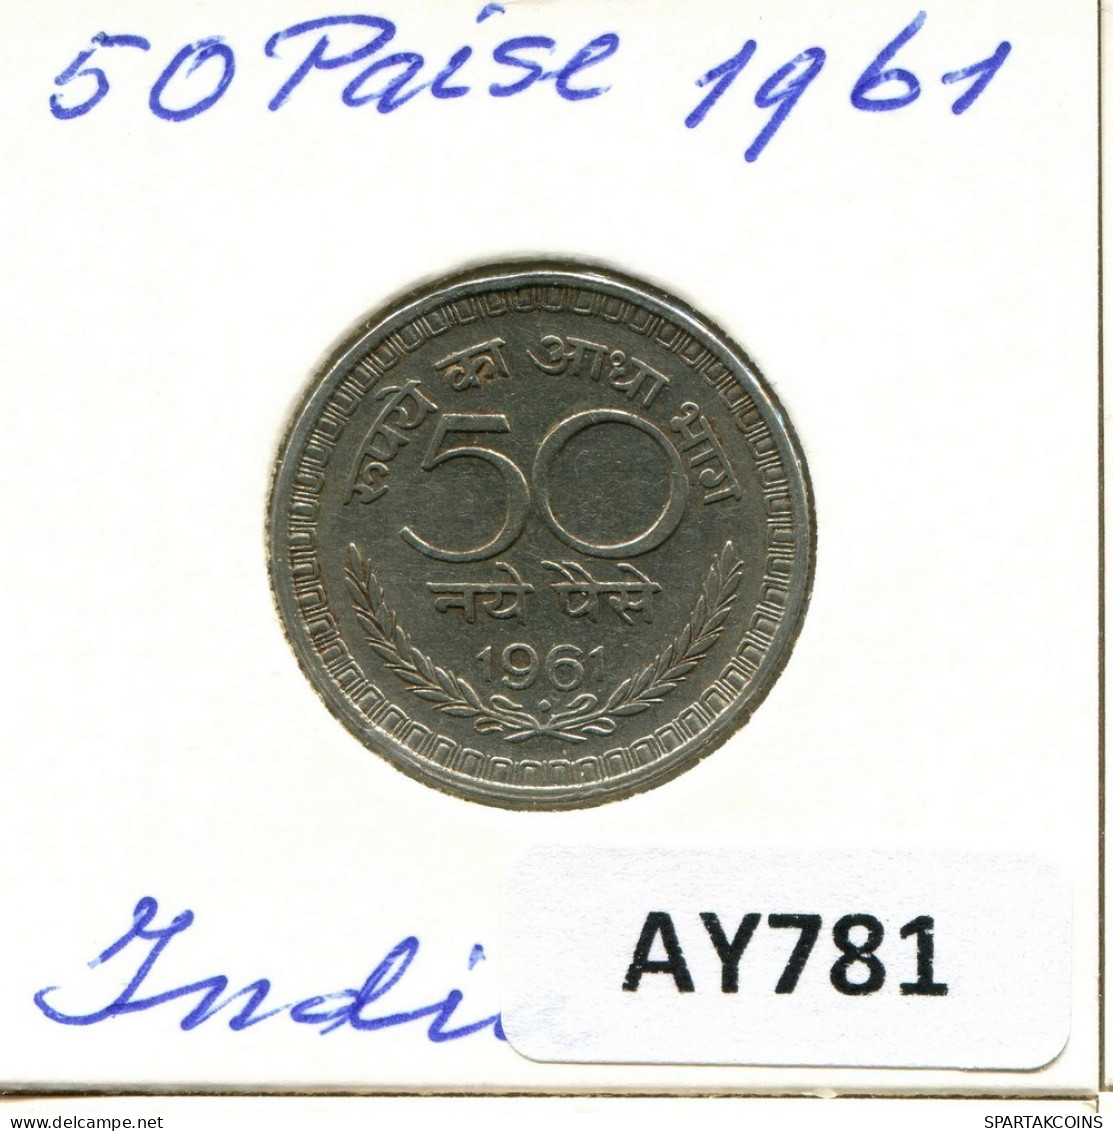 50 PAISE 1961 INDIA Coin #AY781.U.A - India